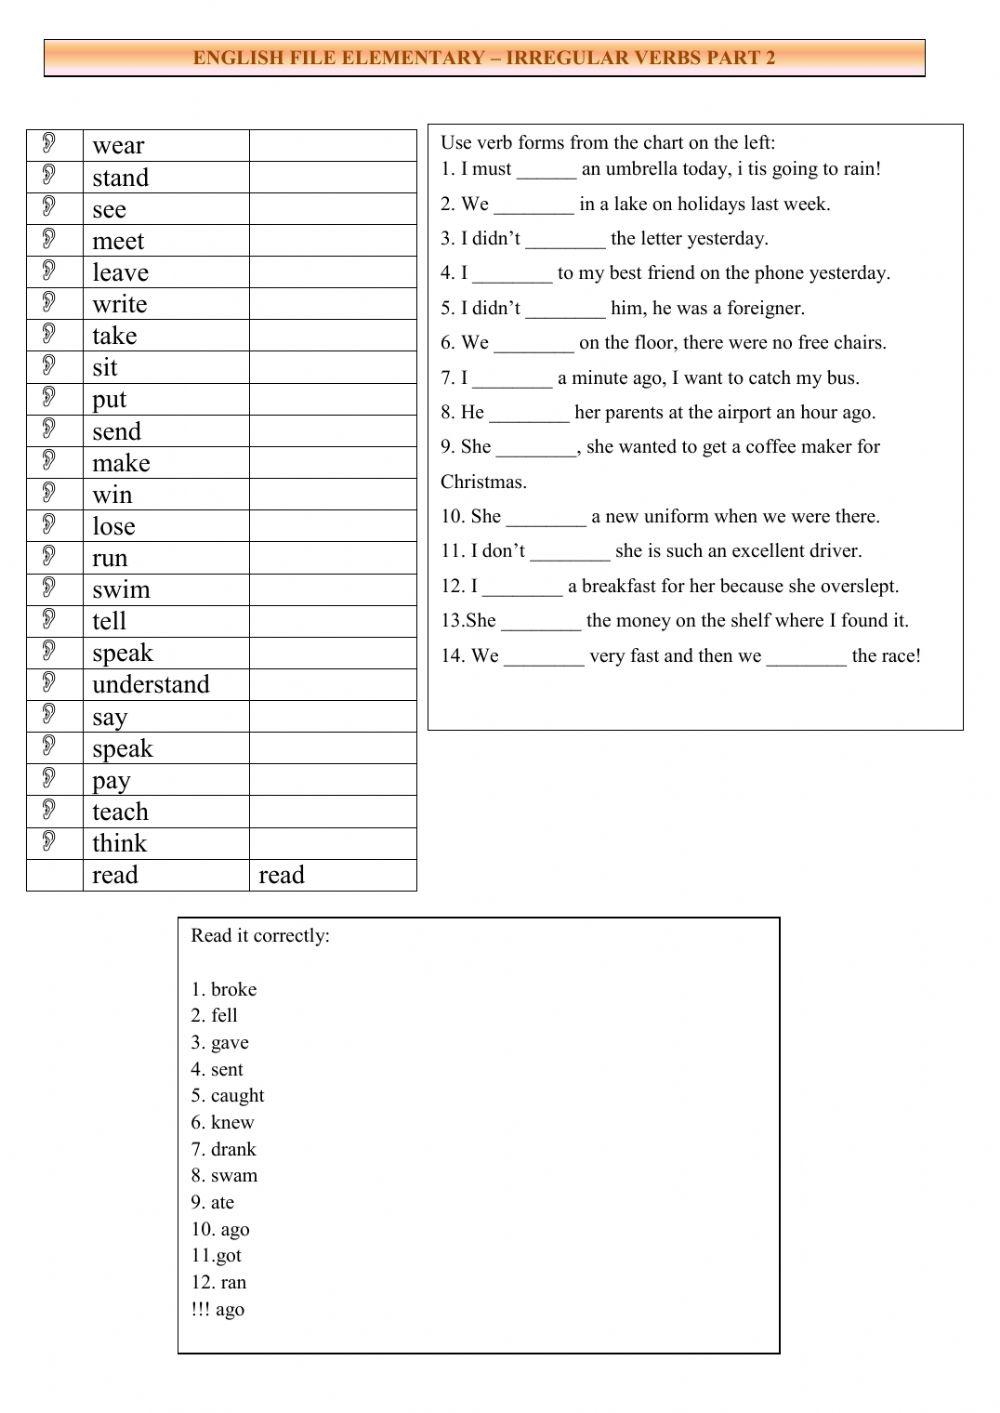 Irregular verbs - part 1 (English File Elementary)